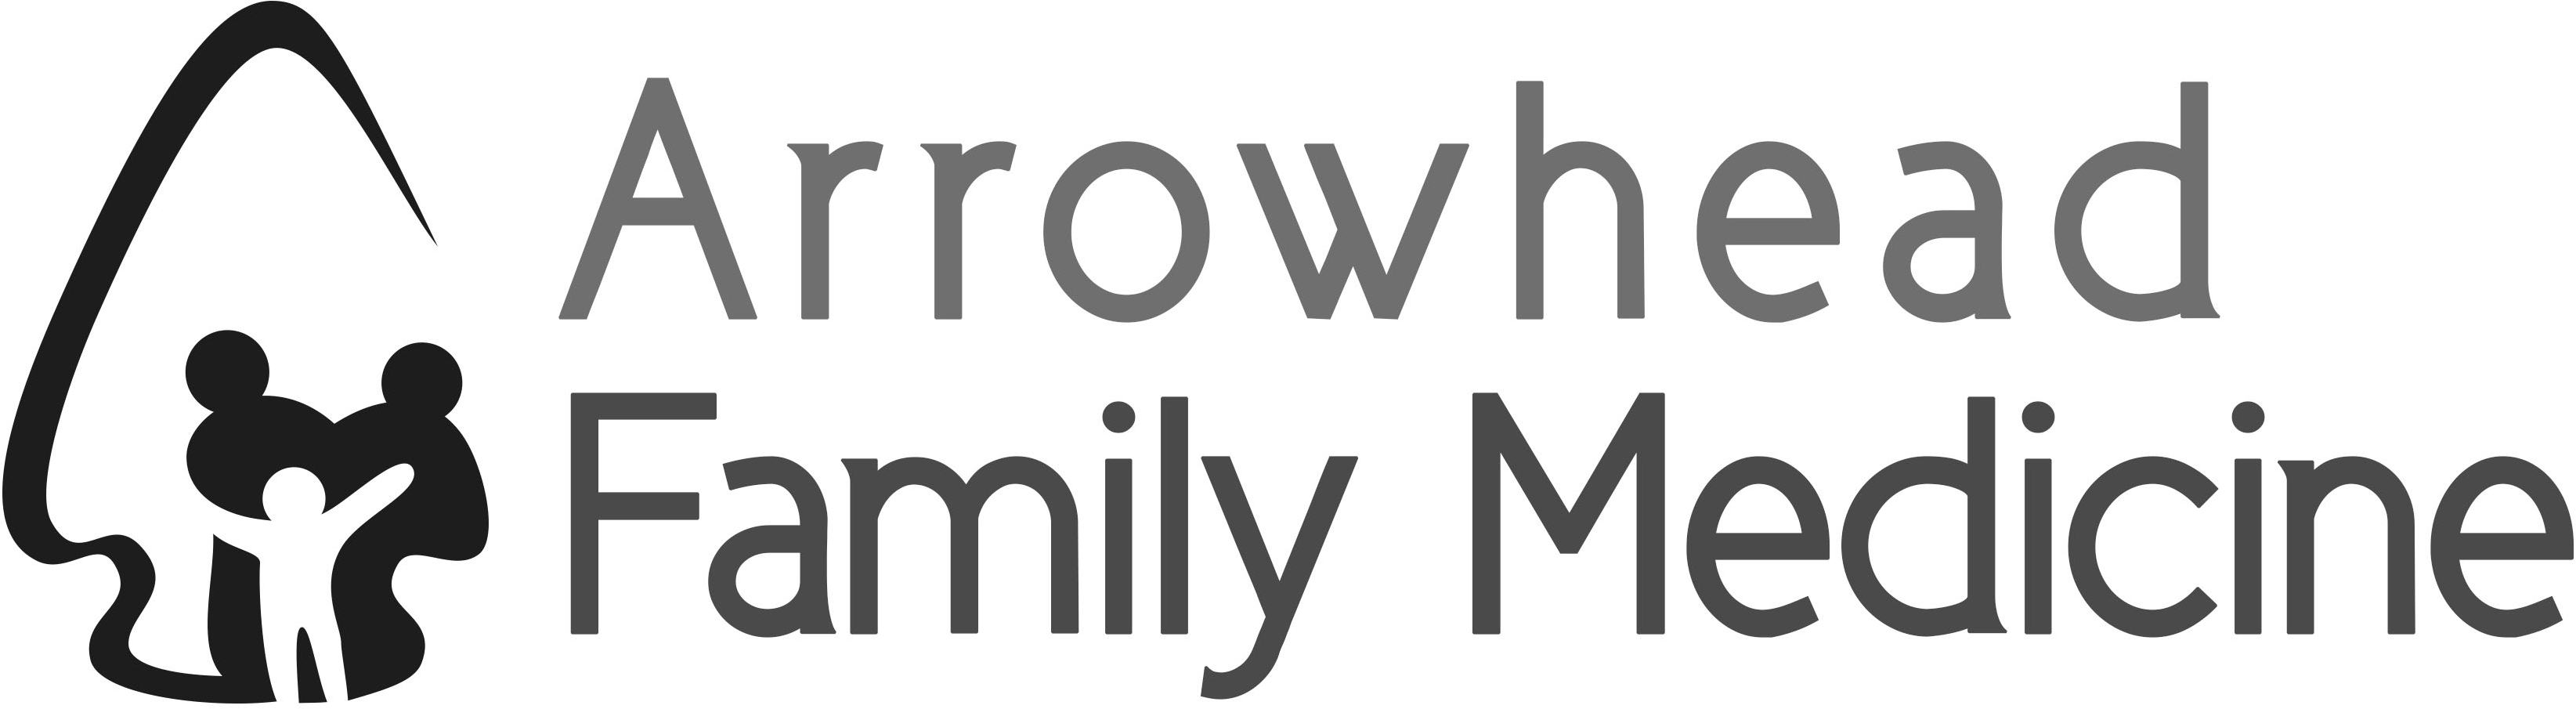 Arrowhead Family Medicine Logo - Medicine (3600x1200), Png Download